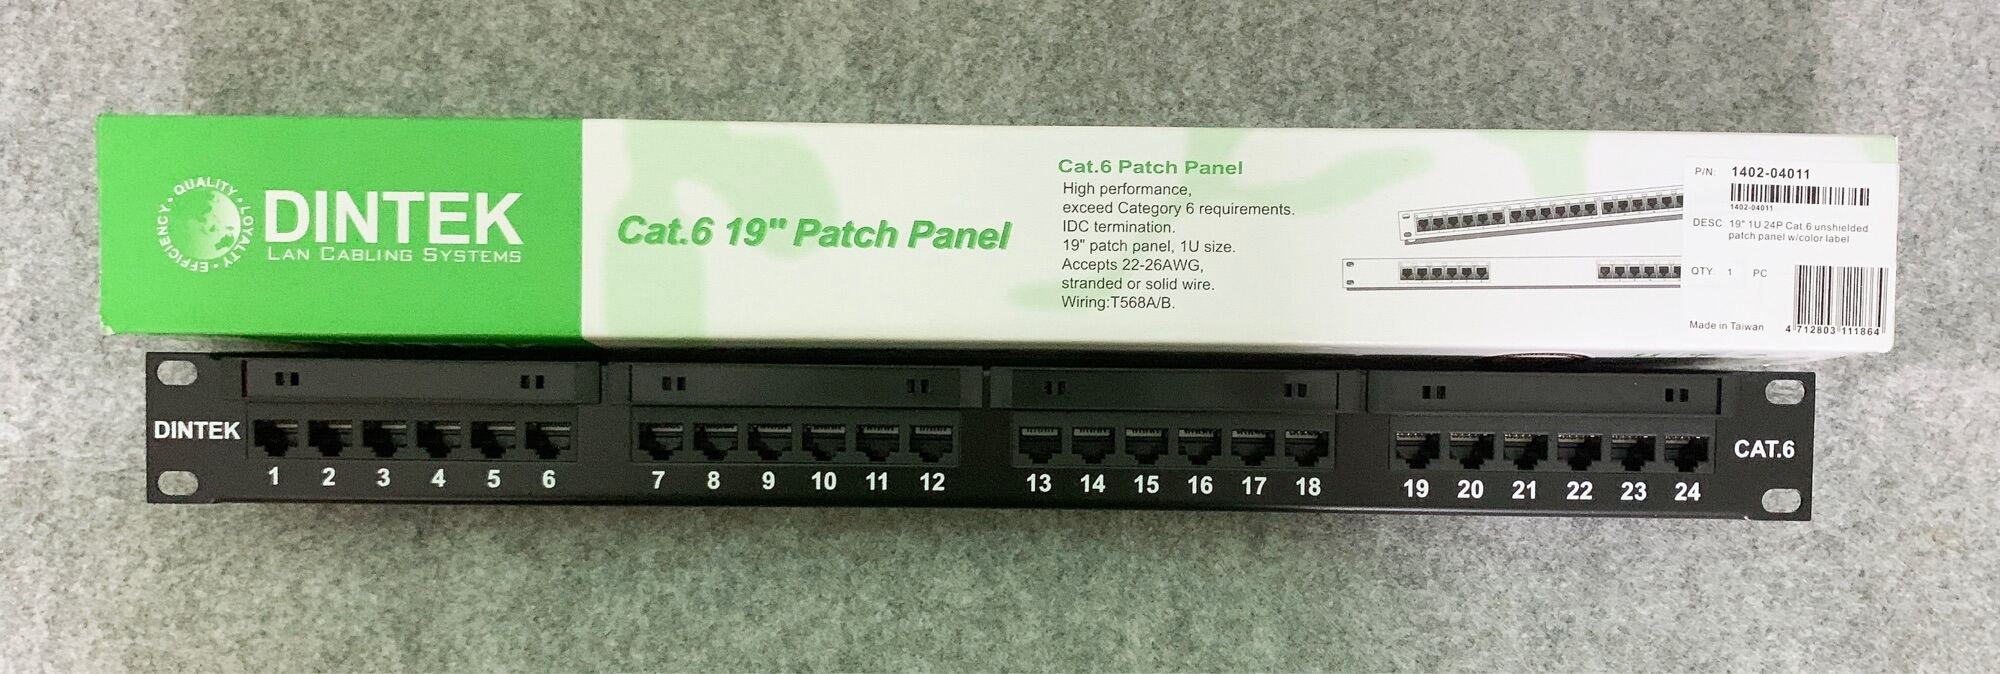 DINTEK Patch Panel Cat.6 UTP 1U 24P 19inch 1402-04011